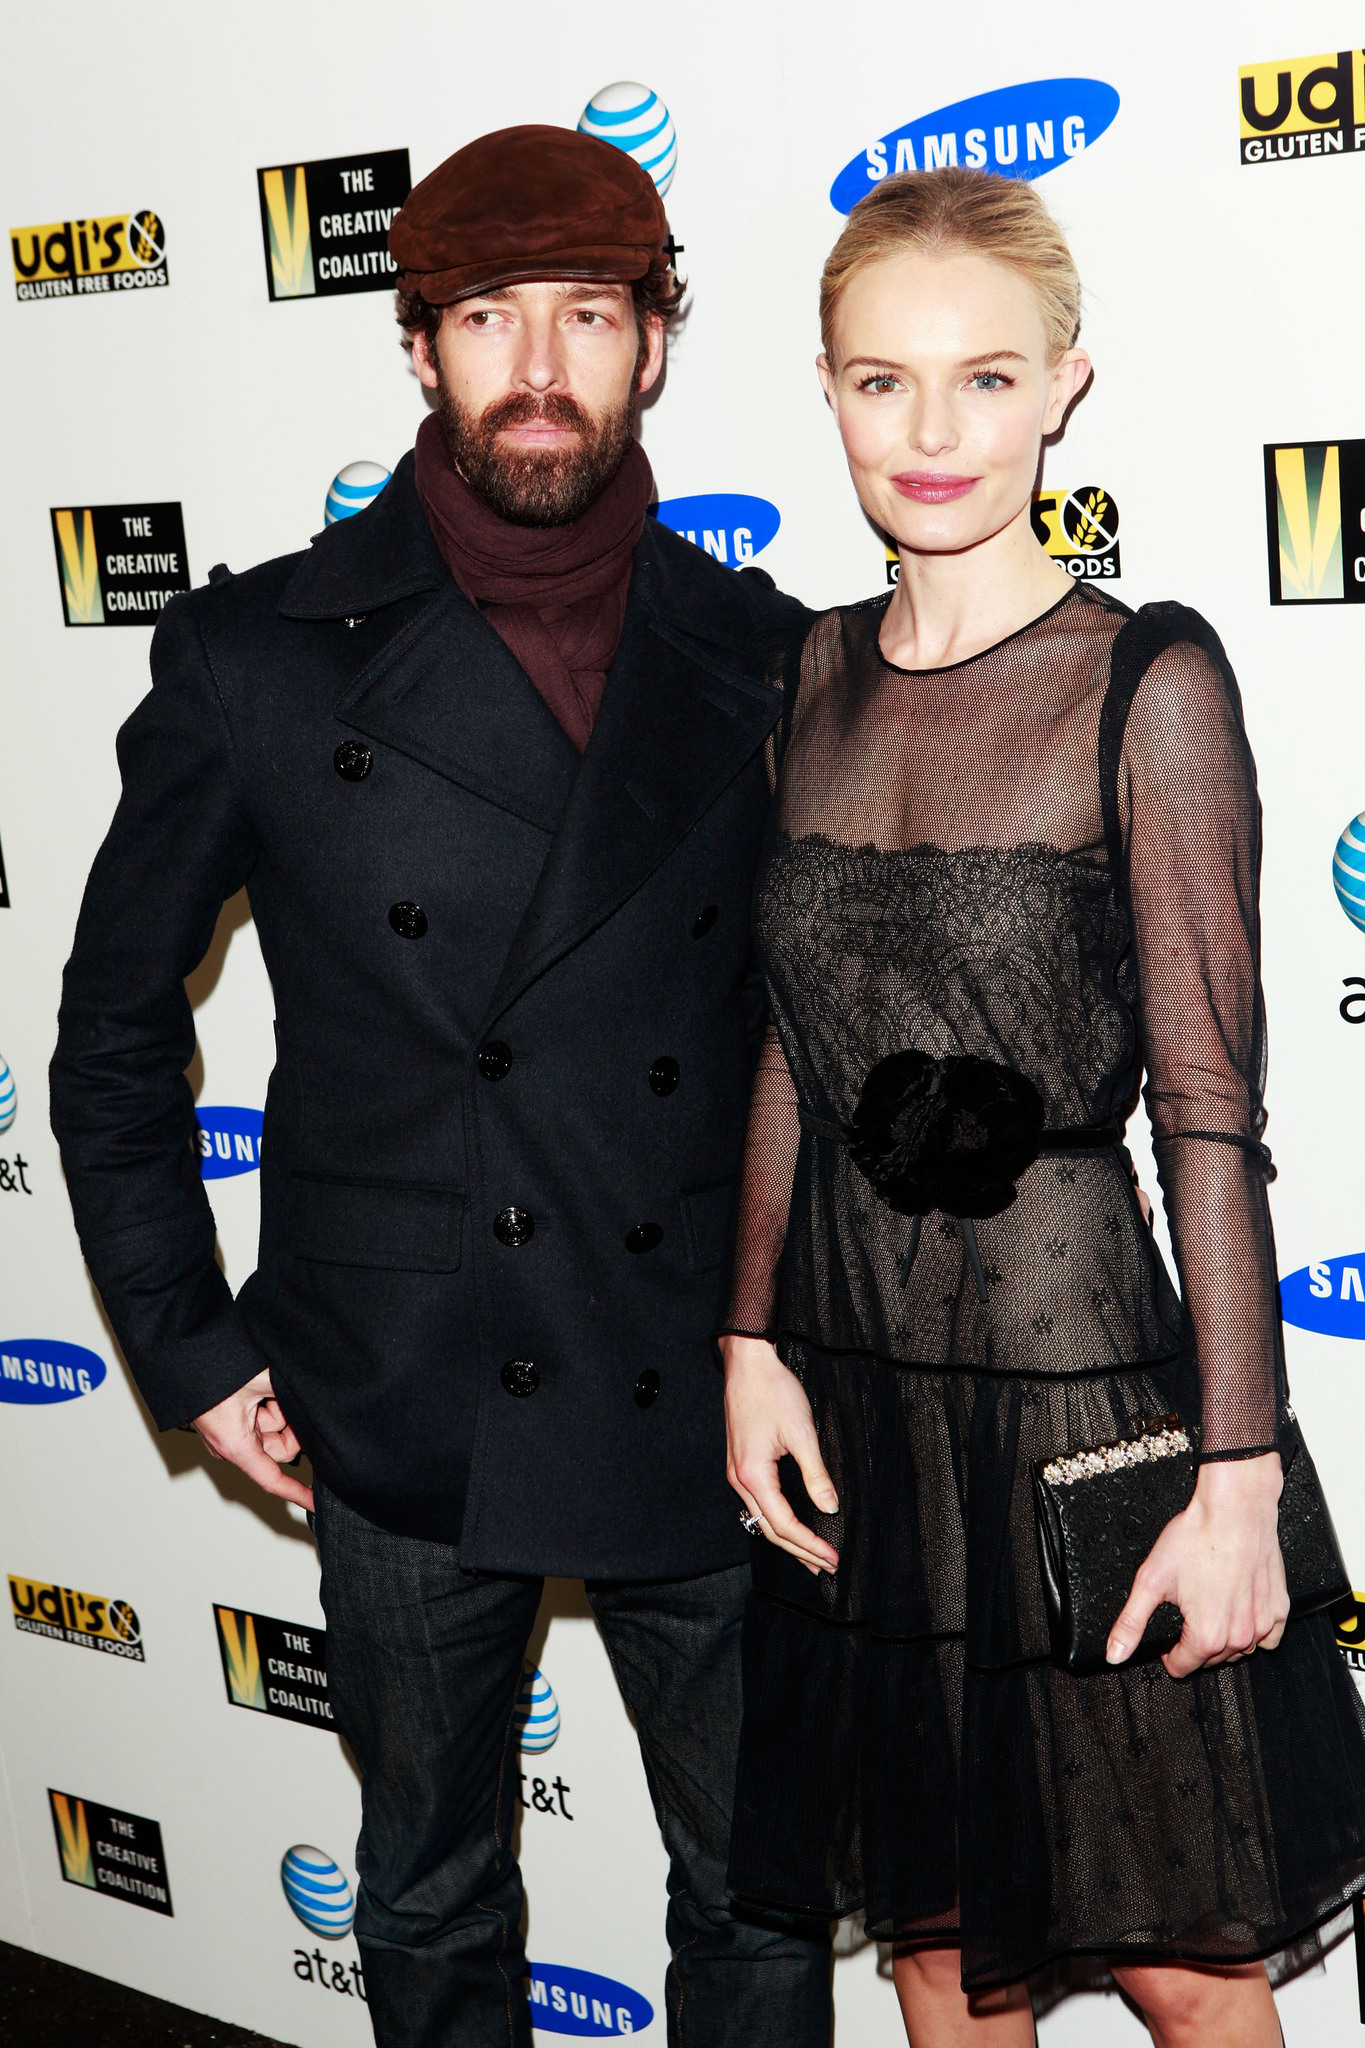 Kate Bosworth and Michael Polish